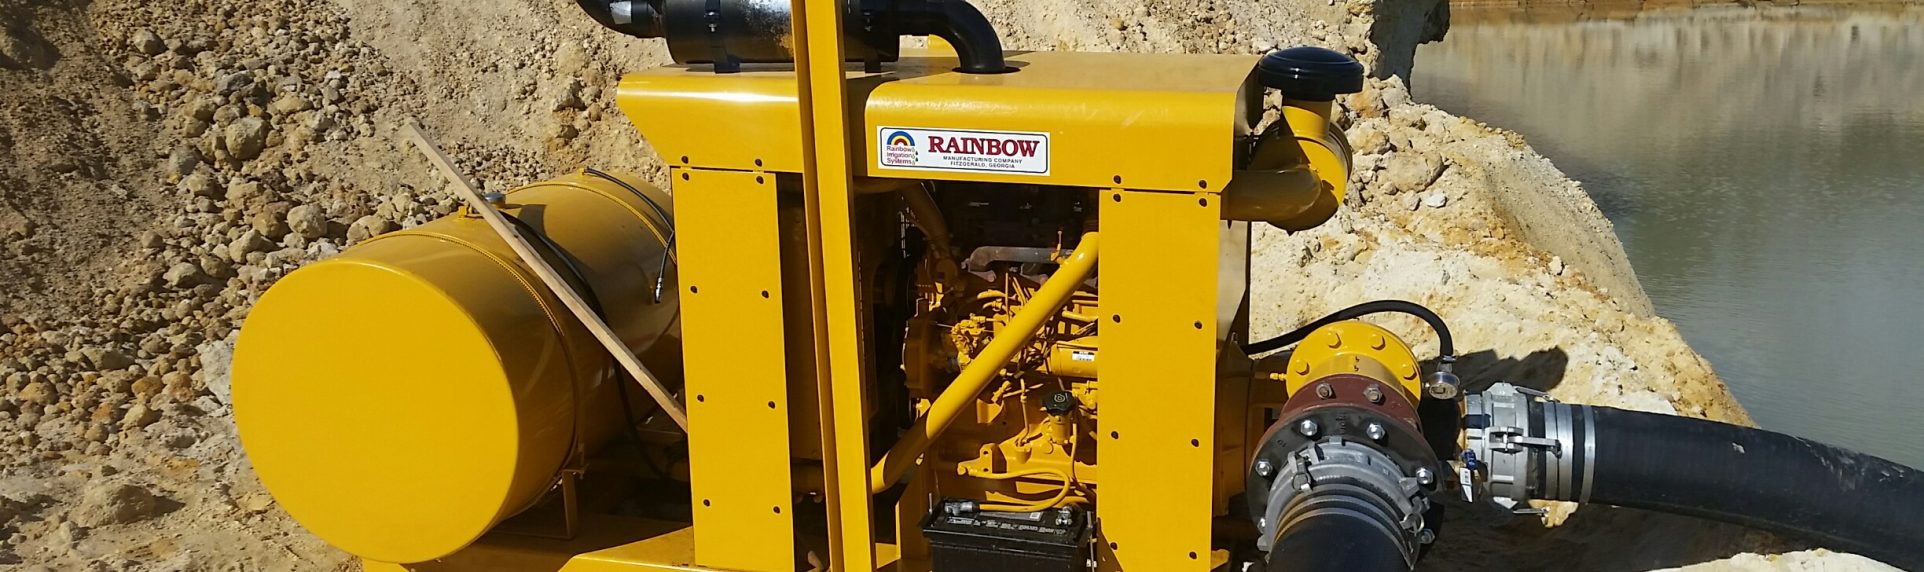 Rainbow Engine Drive Pumping Unit